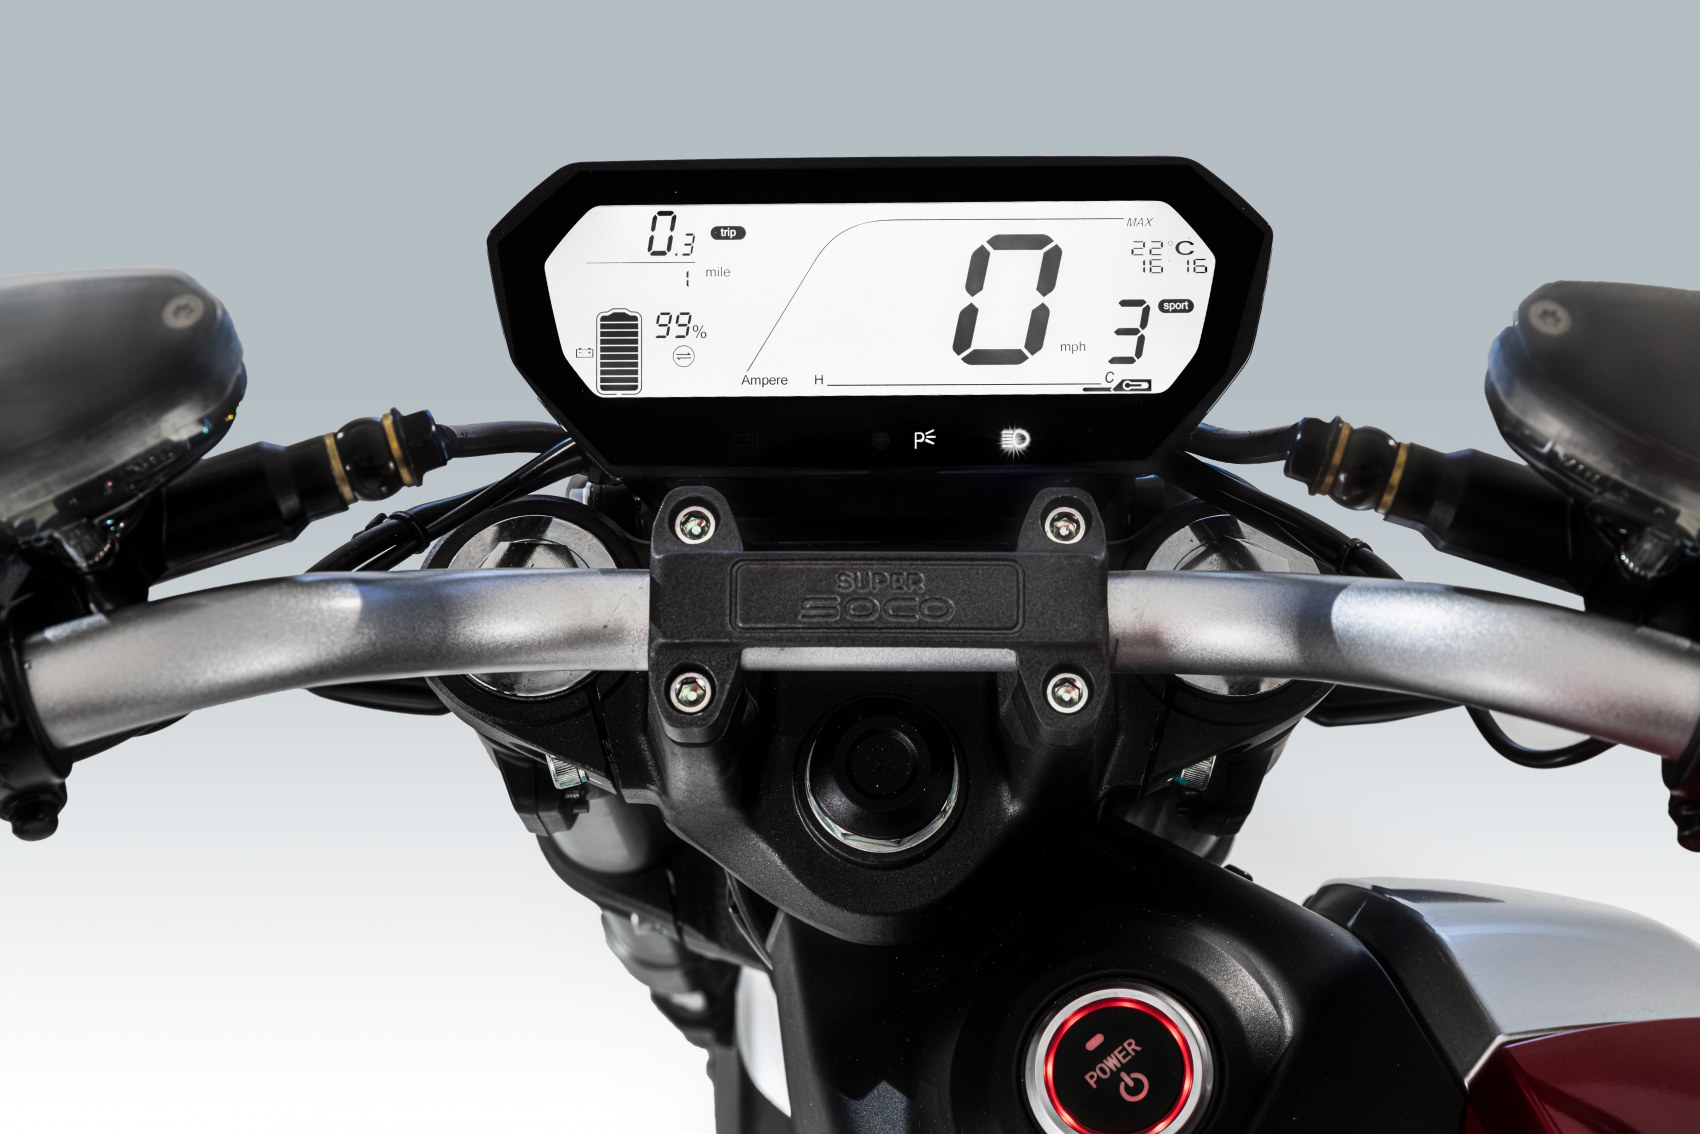 Super Soco TSx electric motorcycle digital dash display